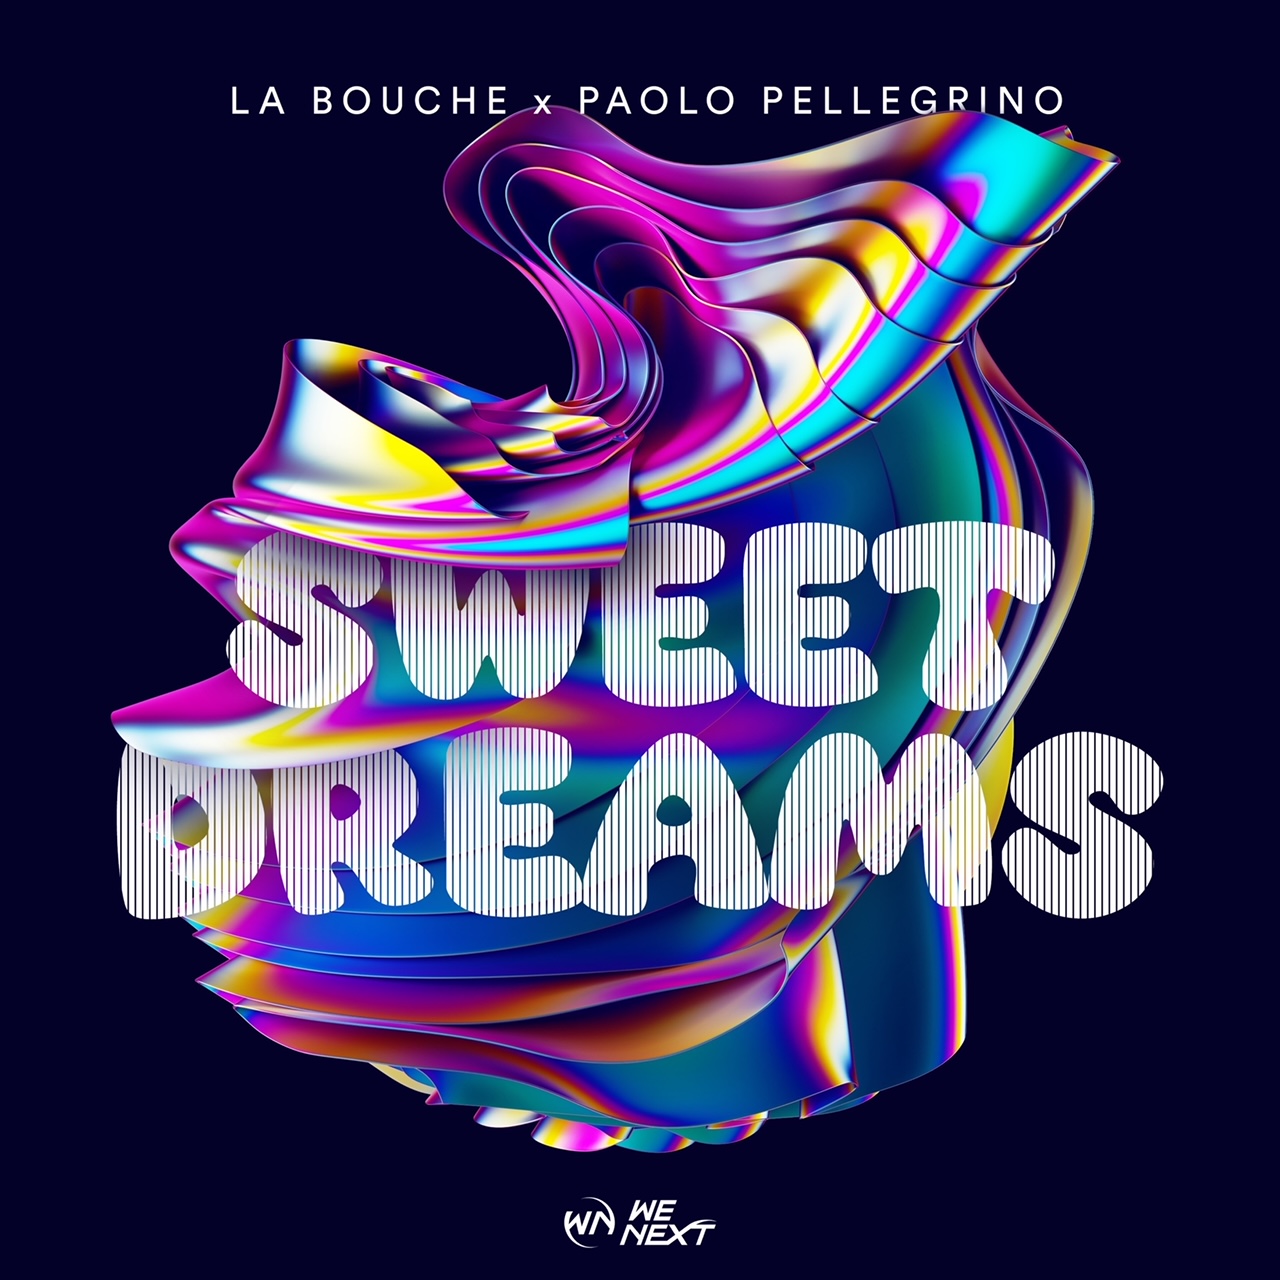 La Bouche x Paolo Pellegrino
‘Sweet Dreams’
